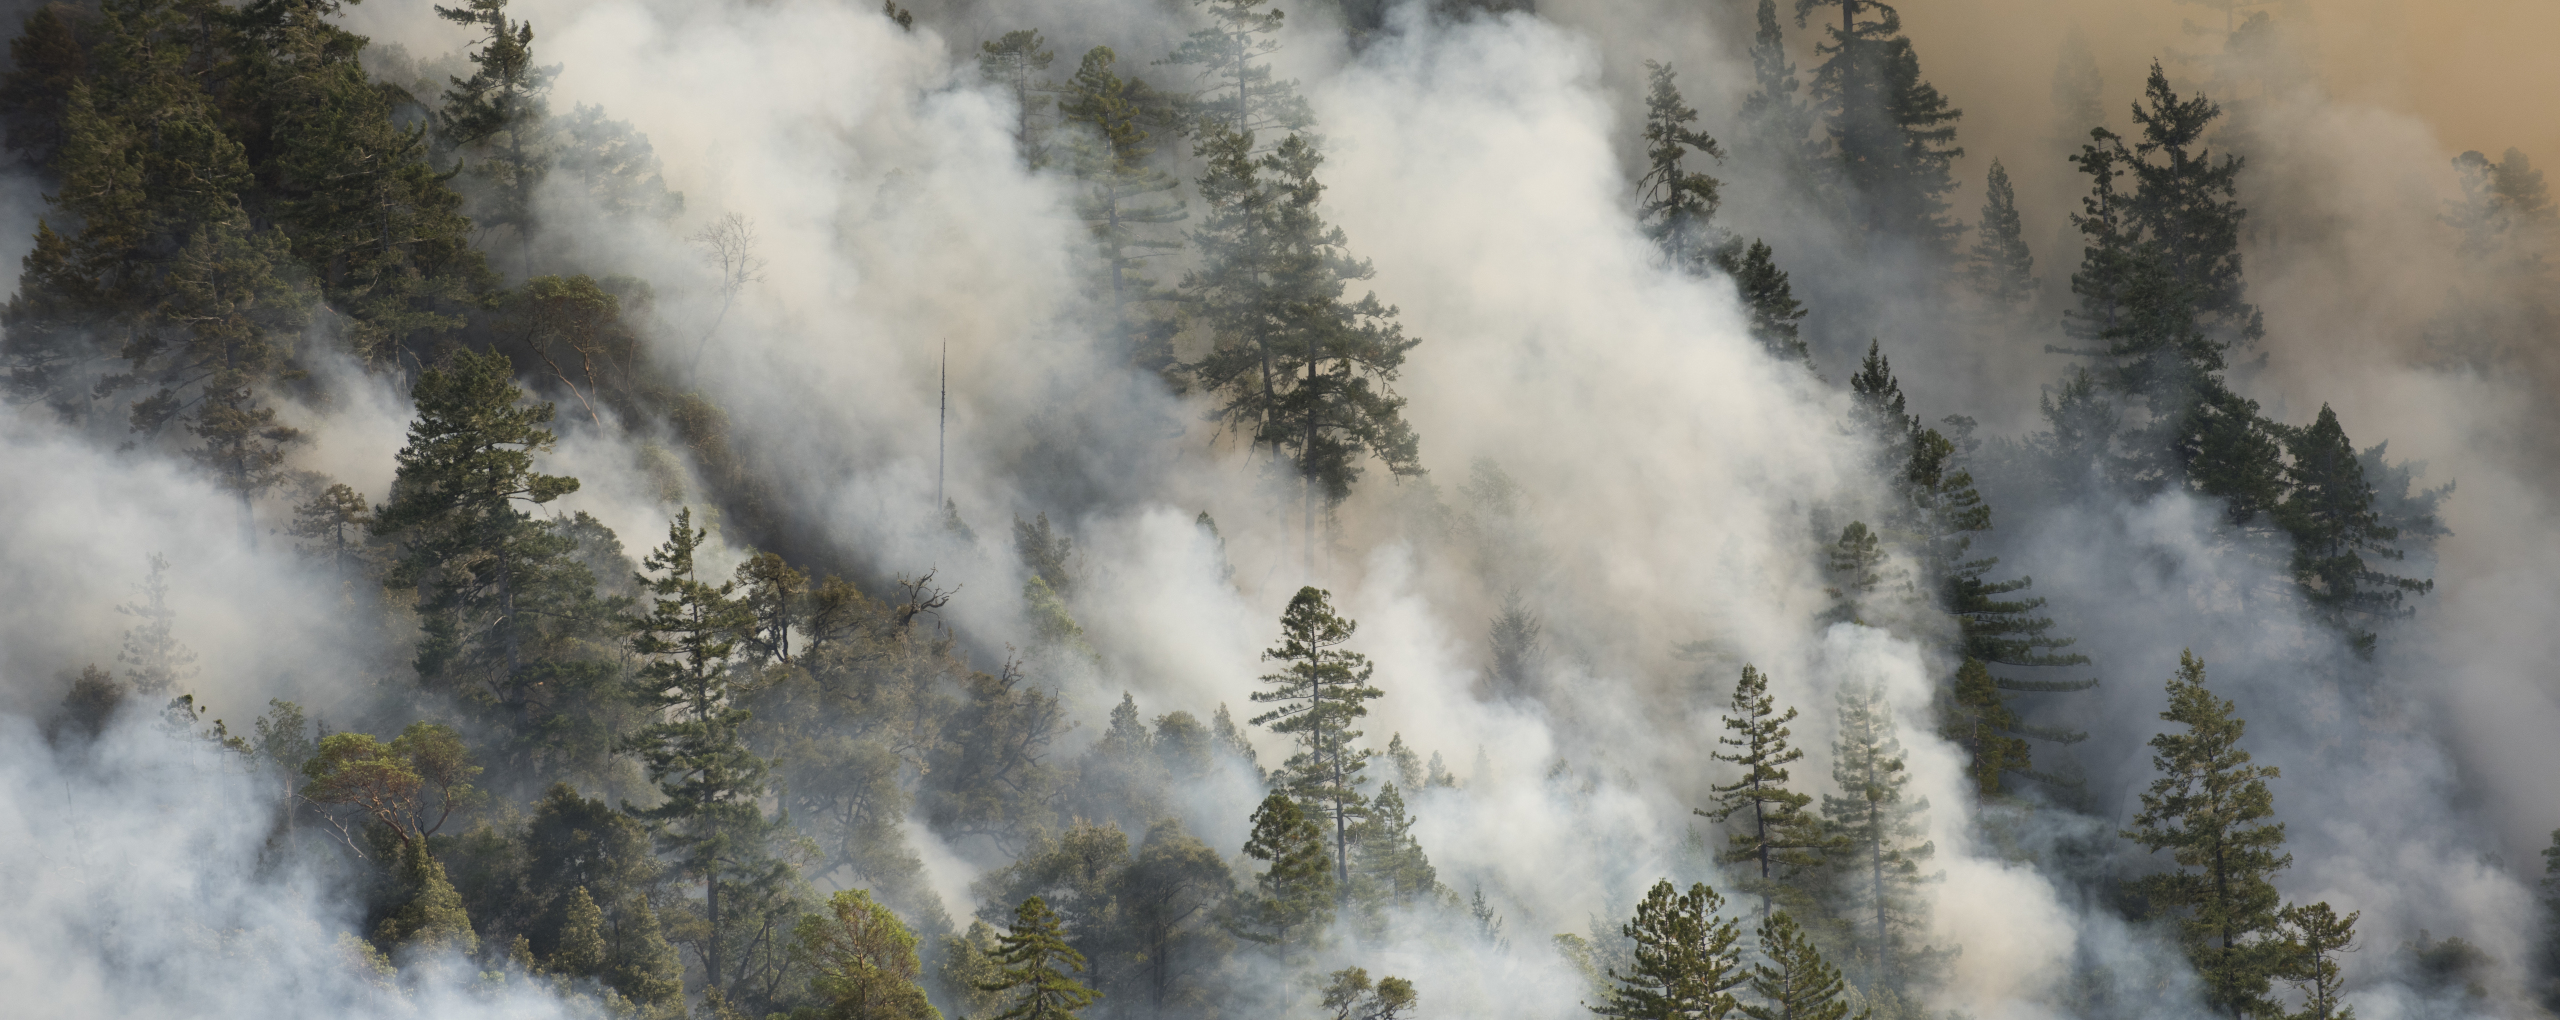 Mendocino CA wildfire restoration